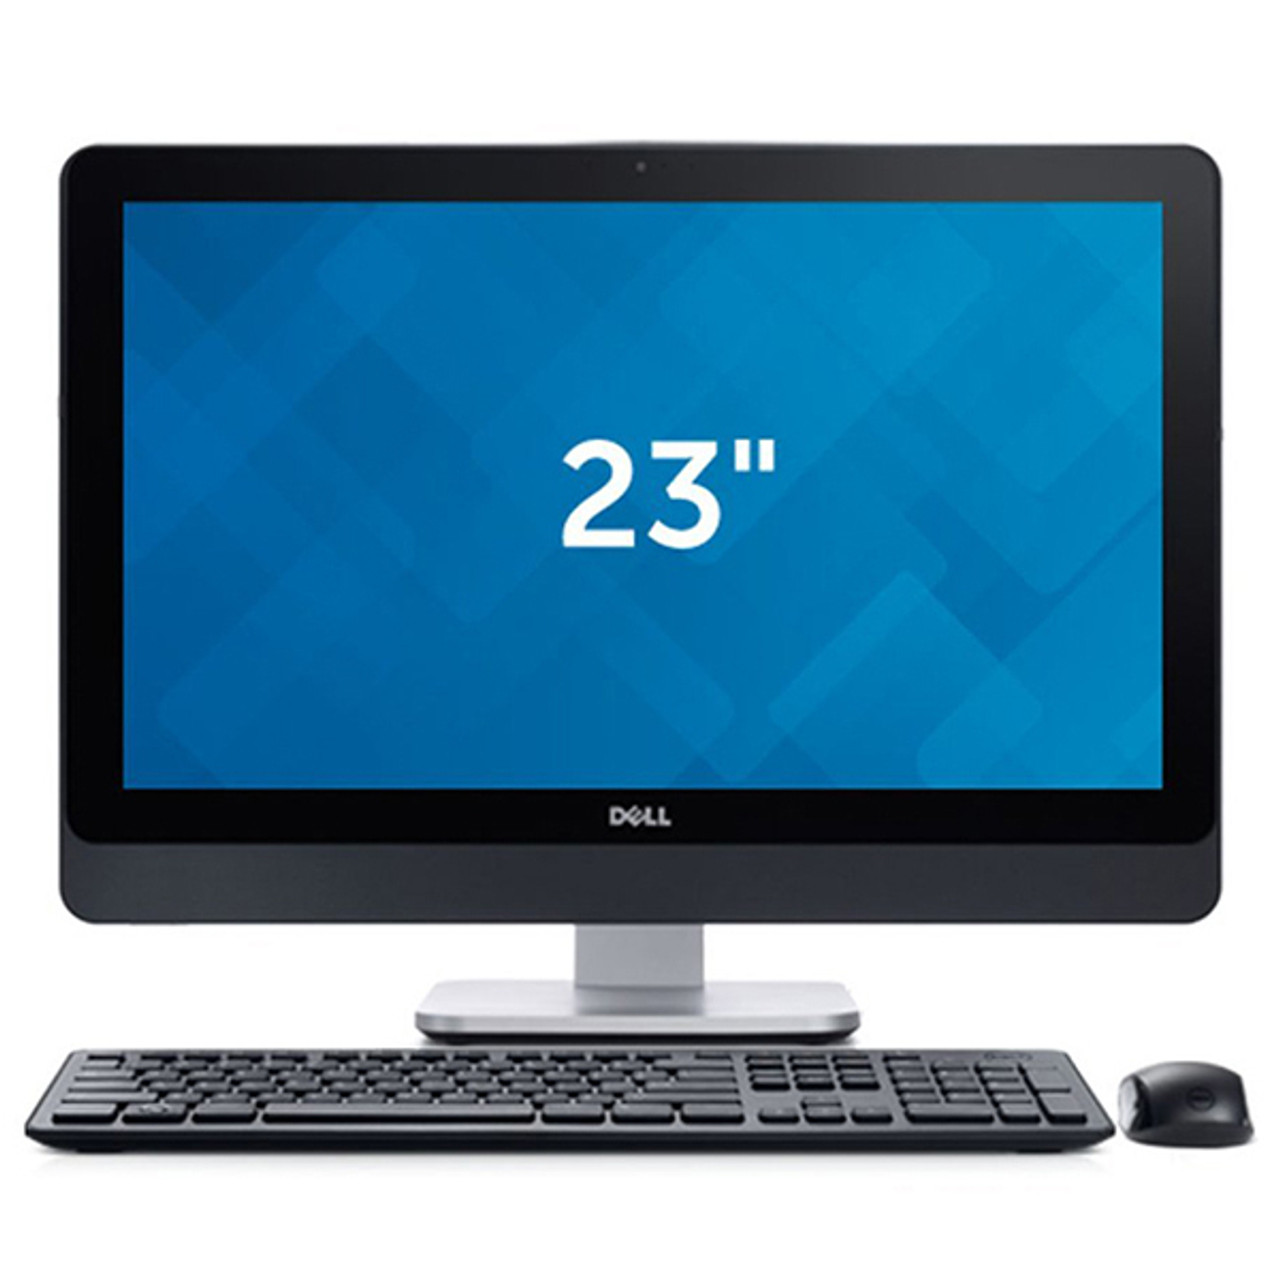 Dell OptiPlex 9020 All-in-One (AIO), Intel Core i7-4590S 3.20GHz, 16GB RAM,  240GB SSD, Windows 10 Pro 64 Bit, WiFi, 23